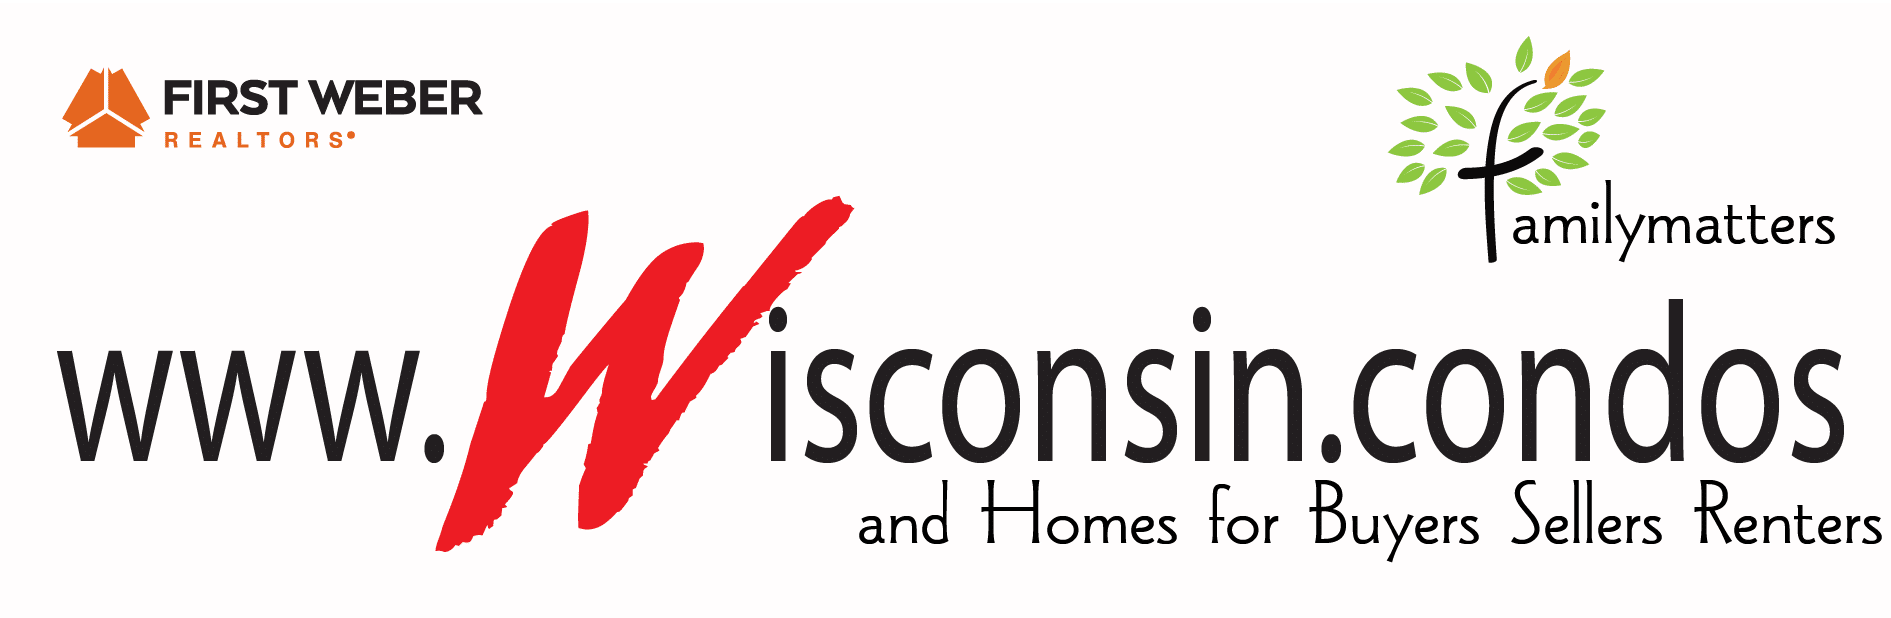 www.Wisconsin.condos